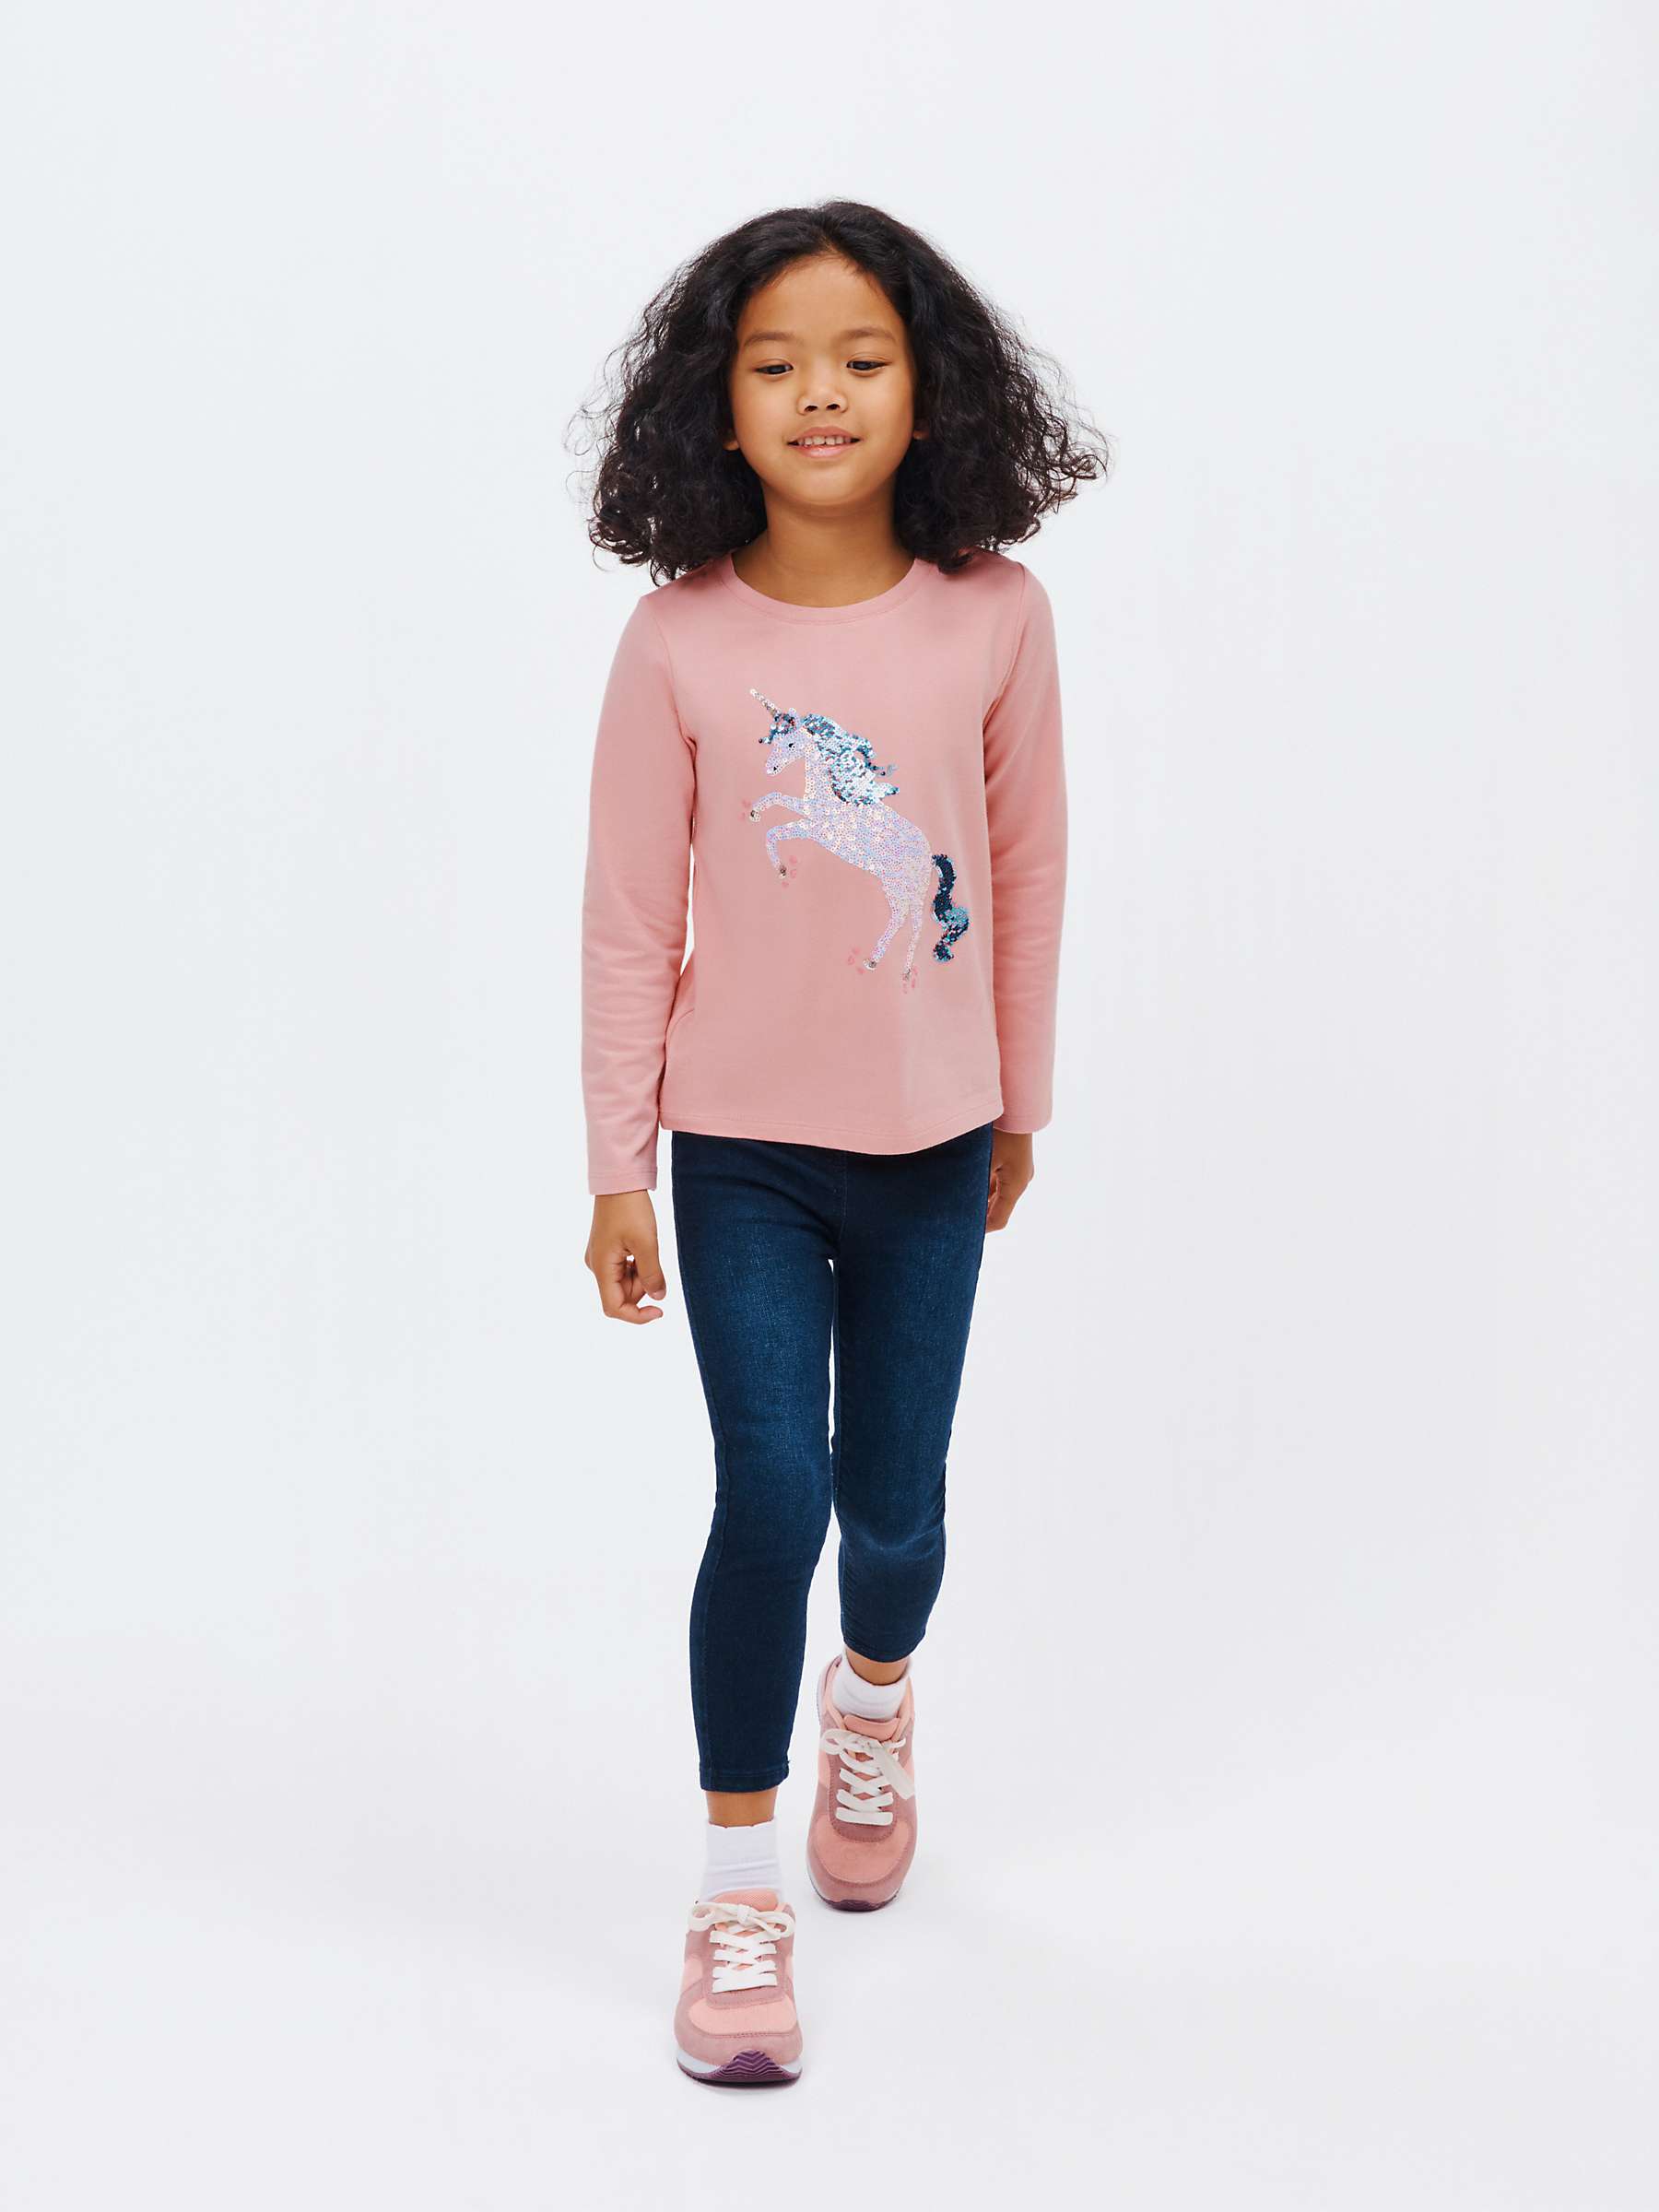 Buy John Lewis Kids' Sequin Unicorn Long Sleeve Jersey Top, Mid Pink Online at johnlewis.com